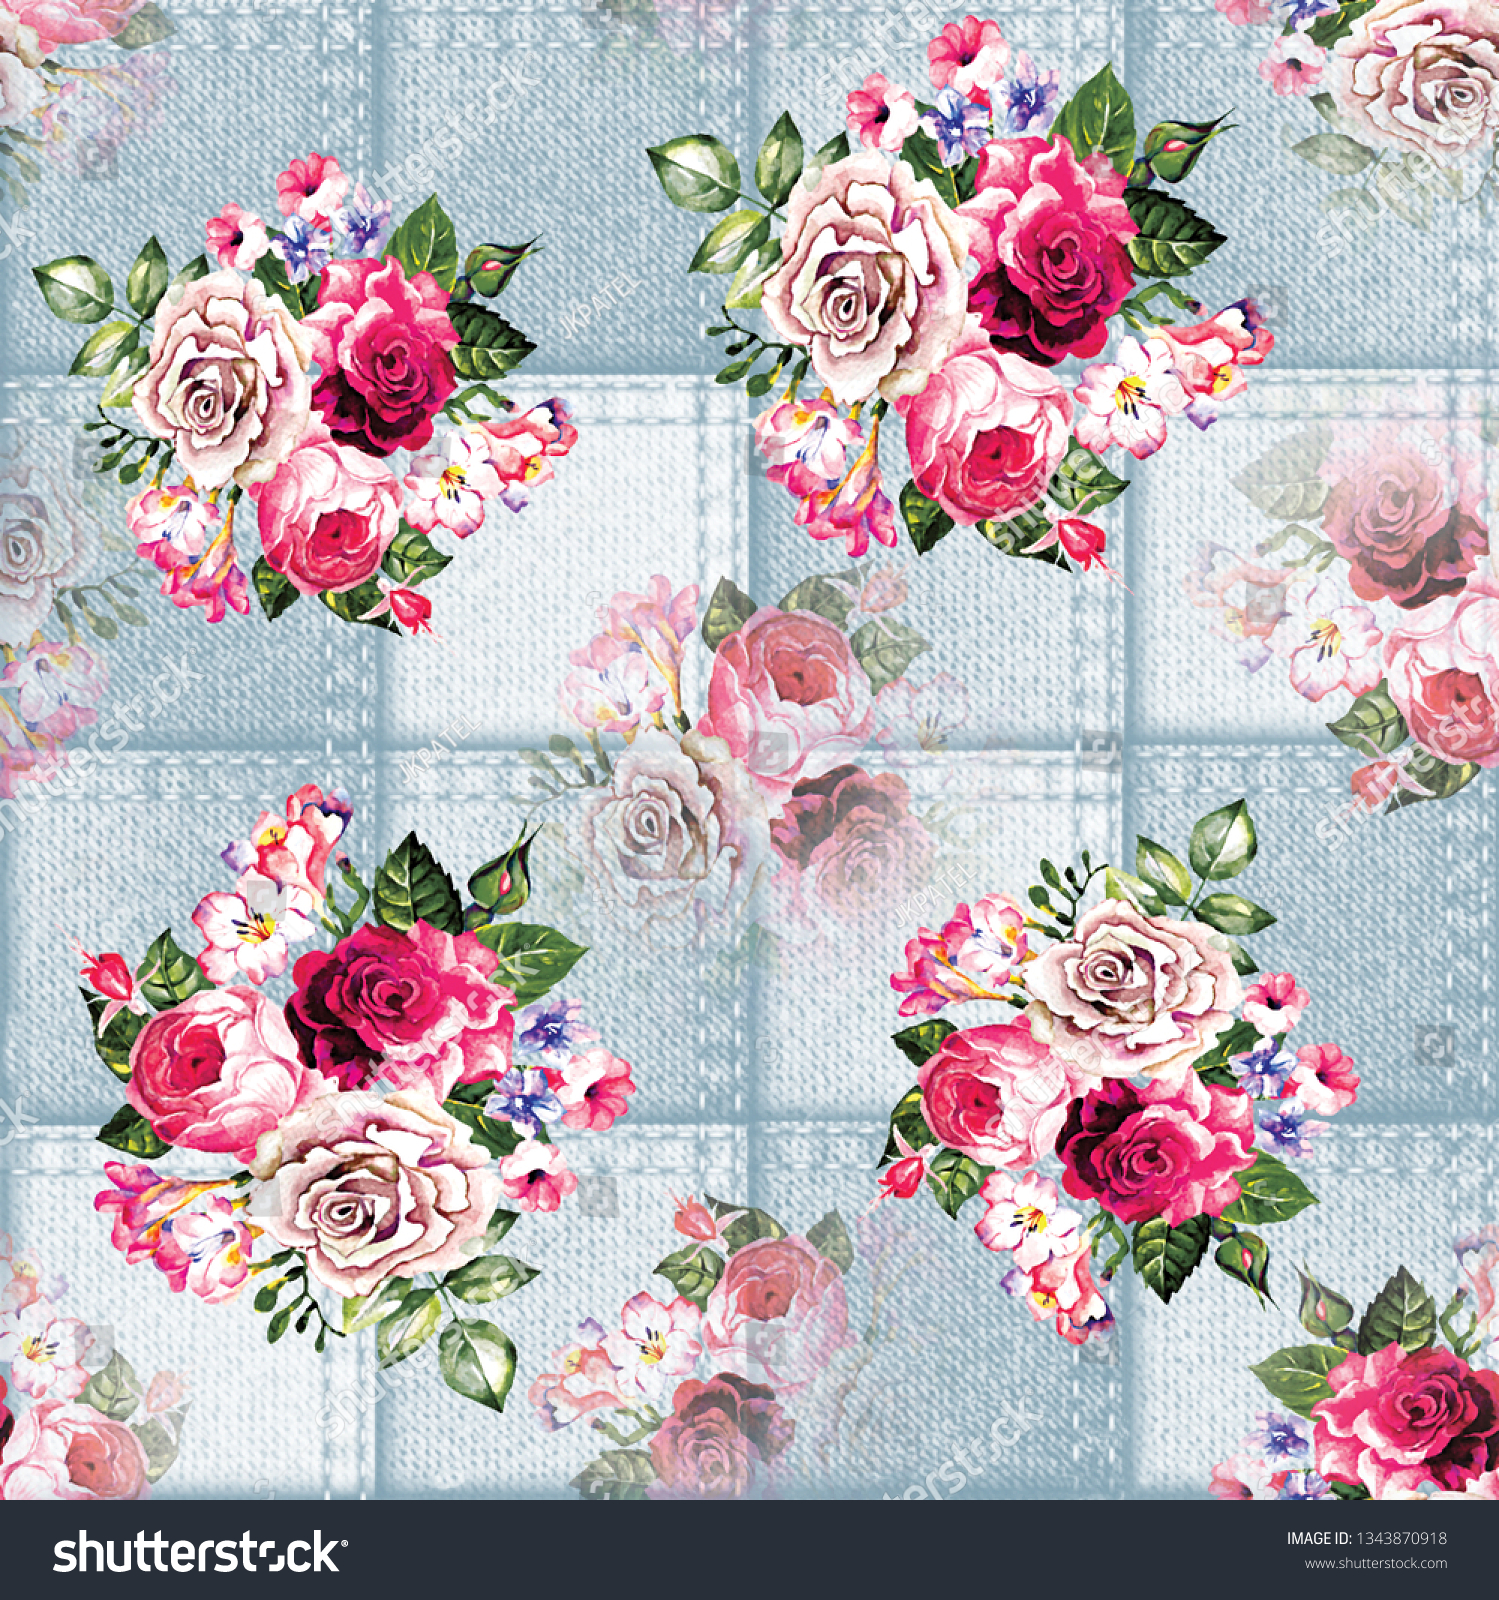 Digital Flower On Checks Fabric Pattern のイラスト素材